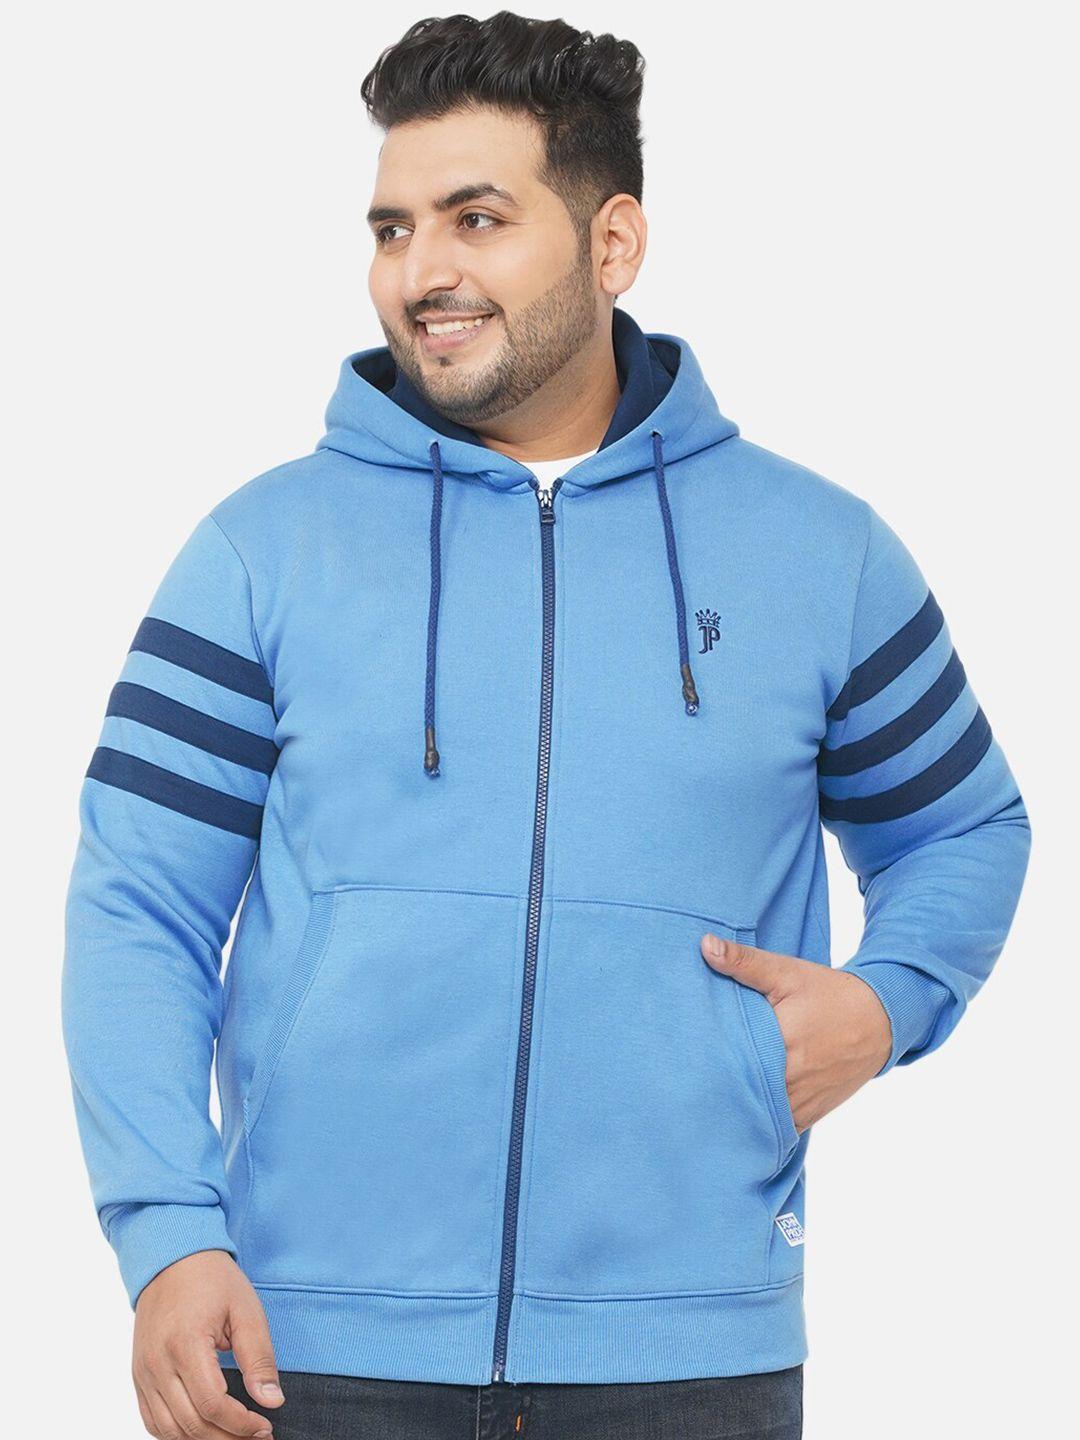 john pride plus-size men blue hooded sweatshirt